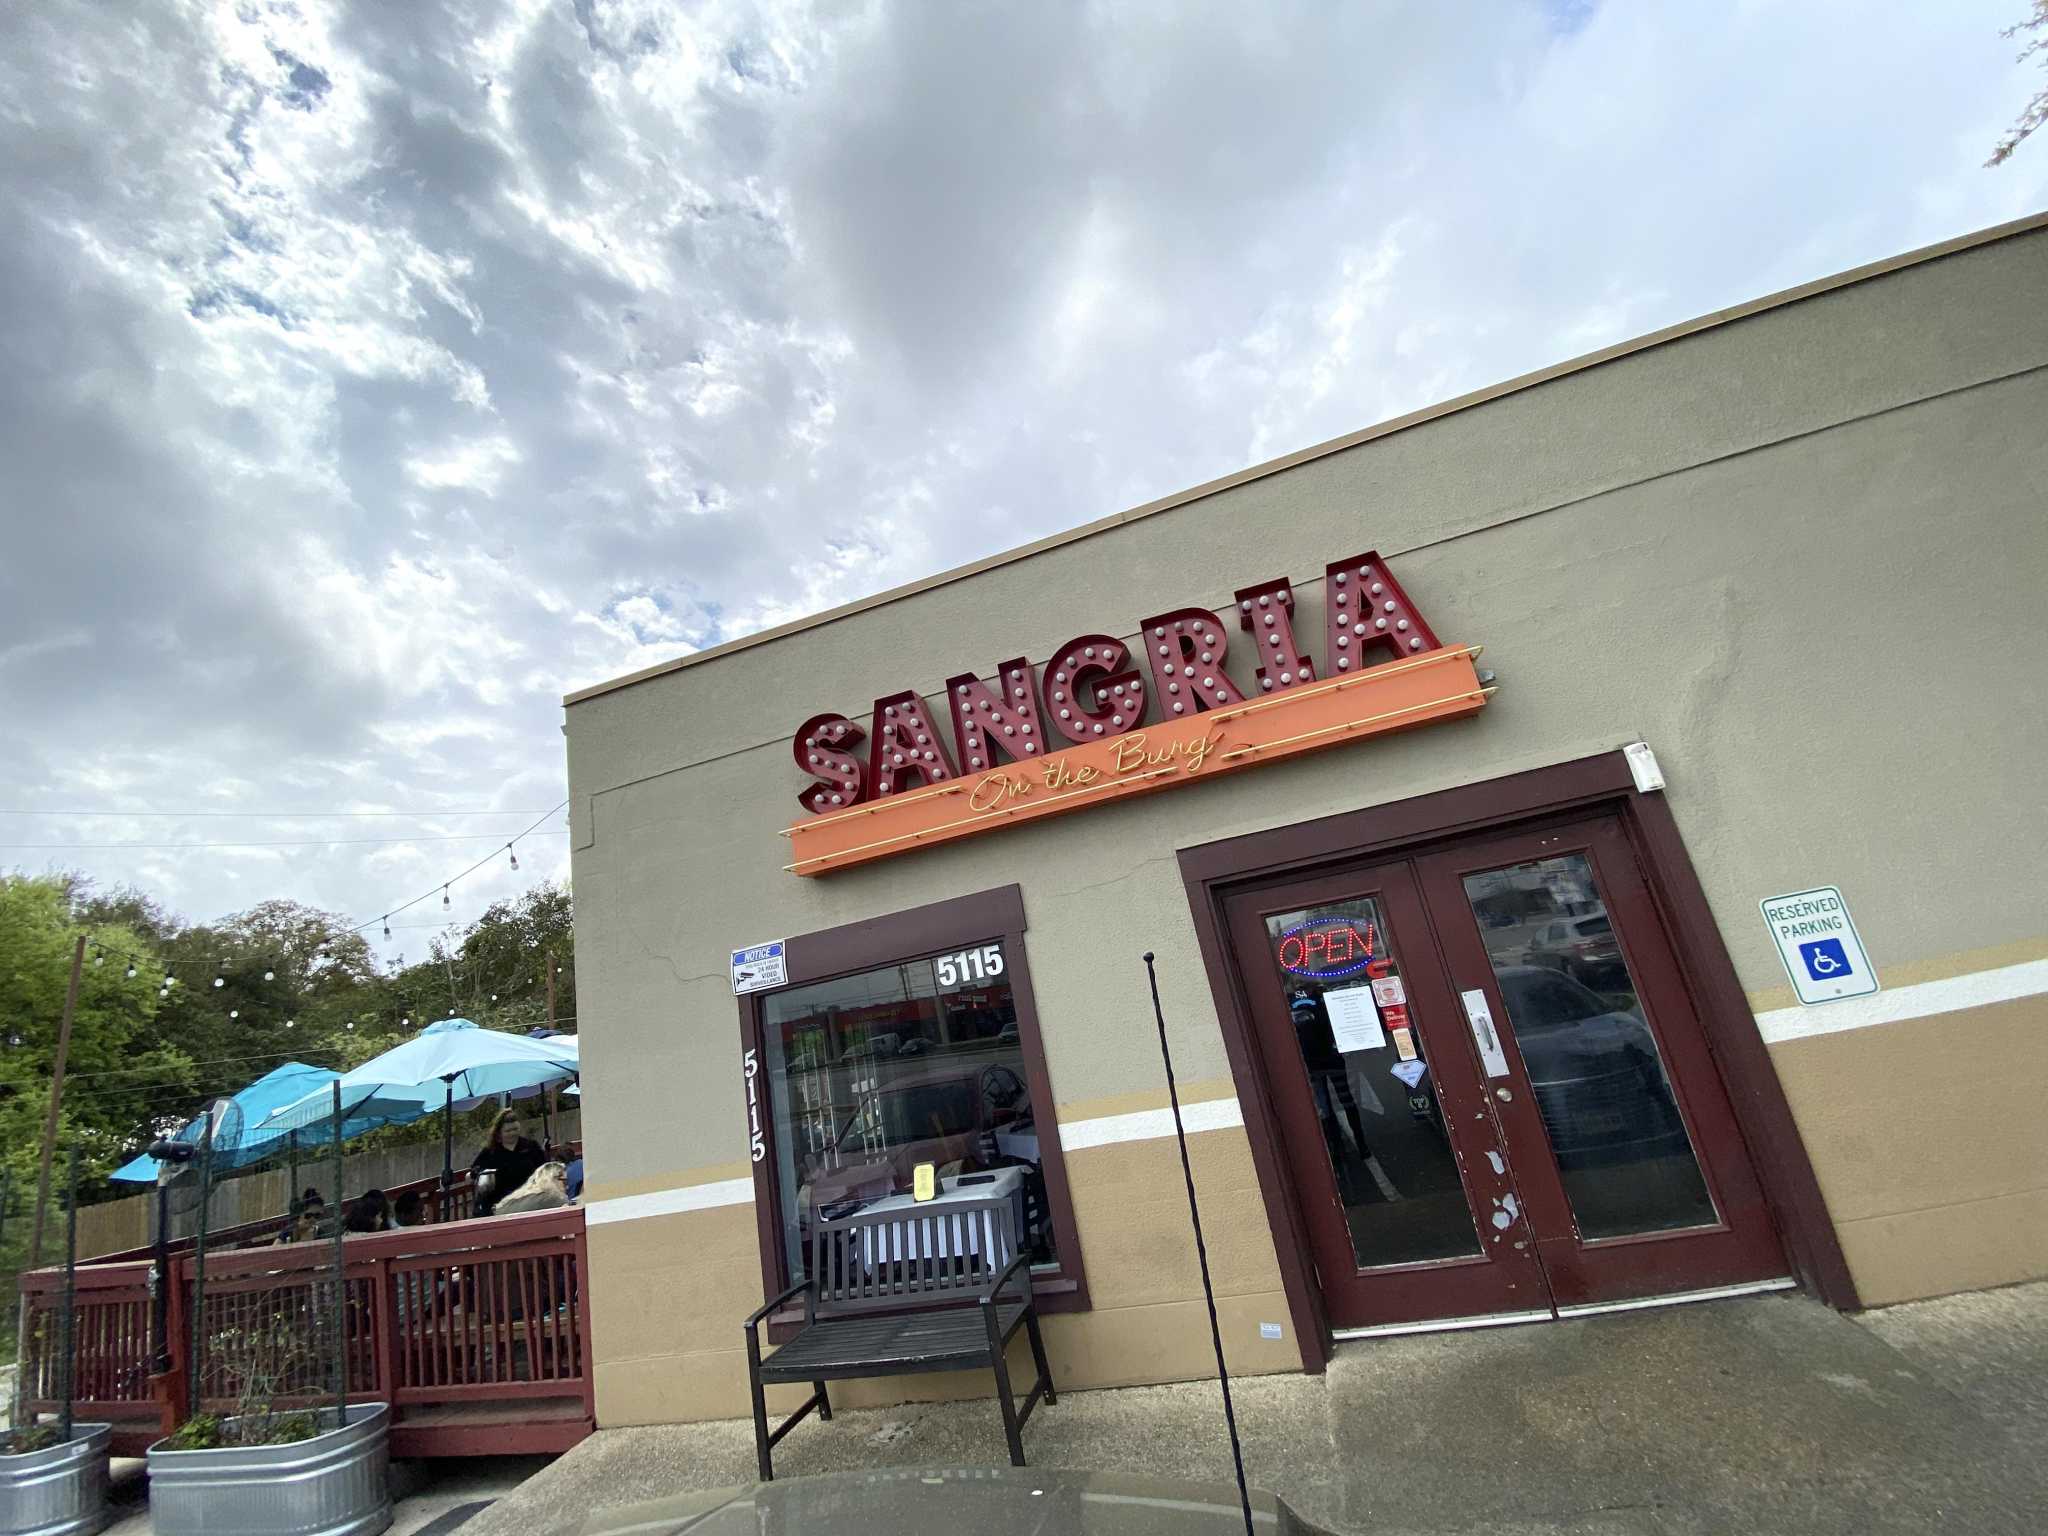 Popular San Antonio restaurants moving to digital menus